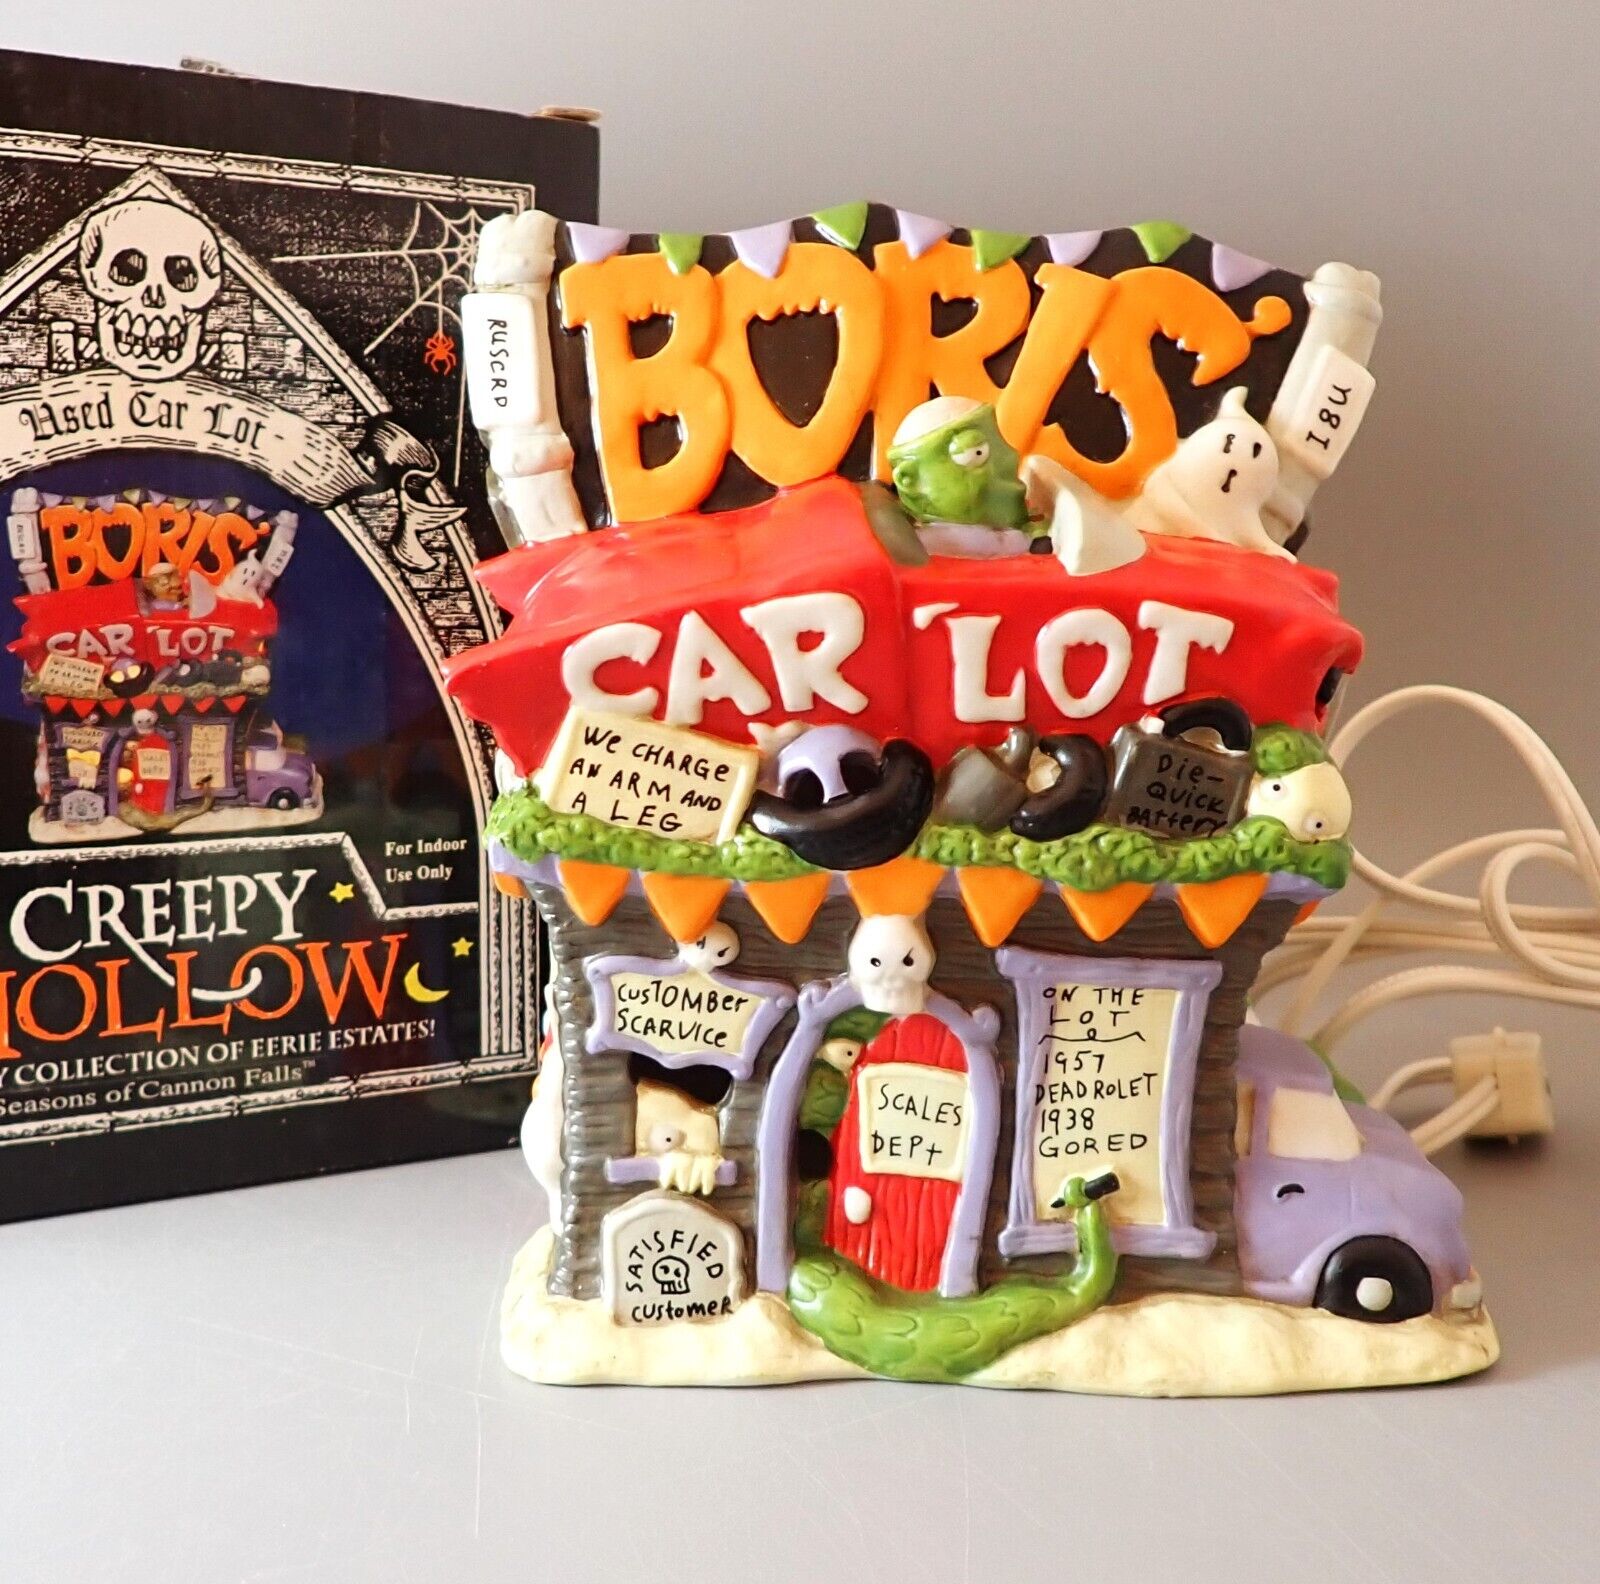 Creepy Hollow Boris\' Used Car Lot Lighted Halloween NIB Midwest of Cannon Falls